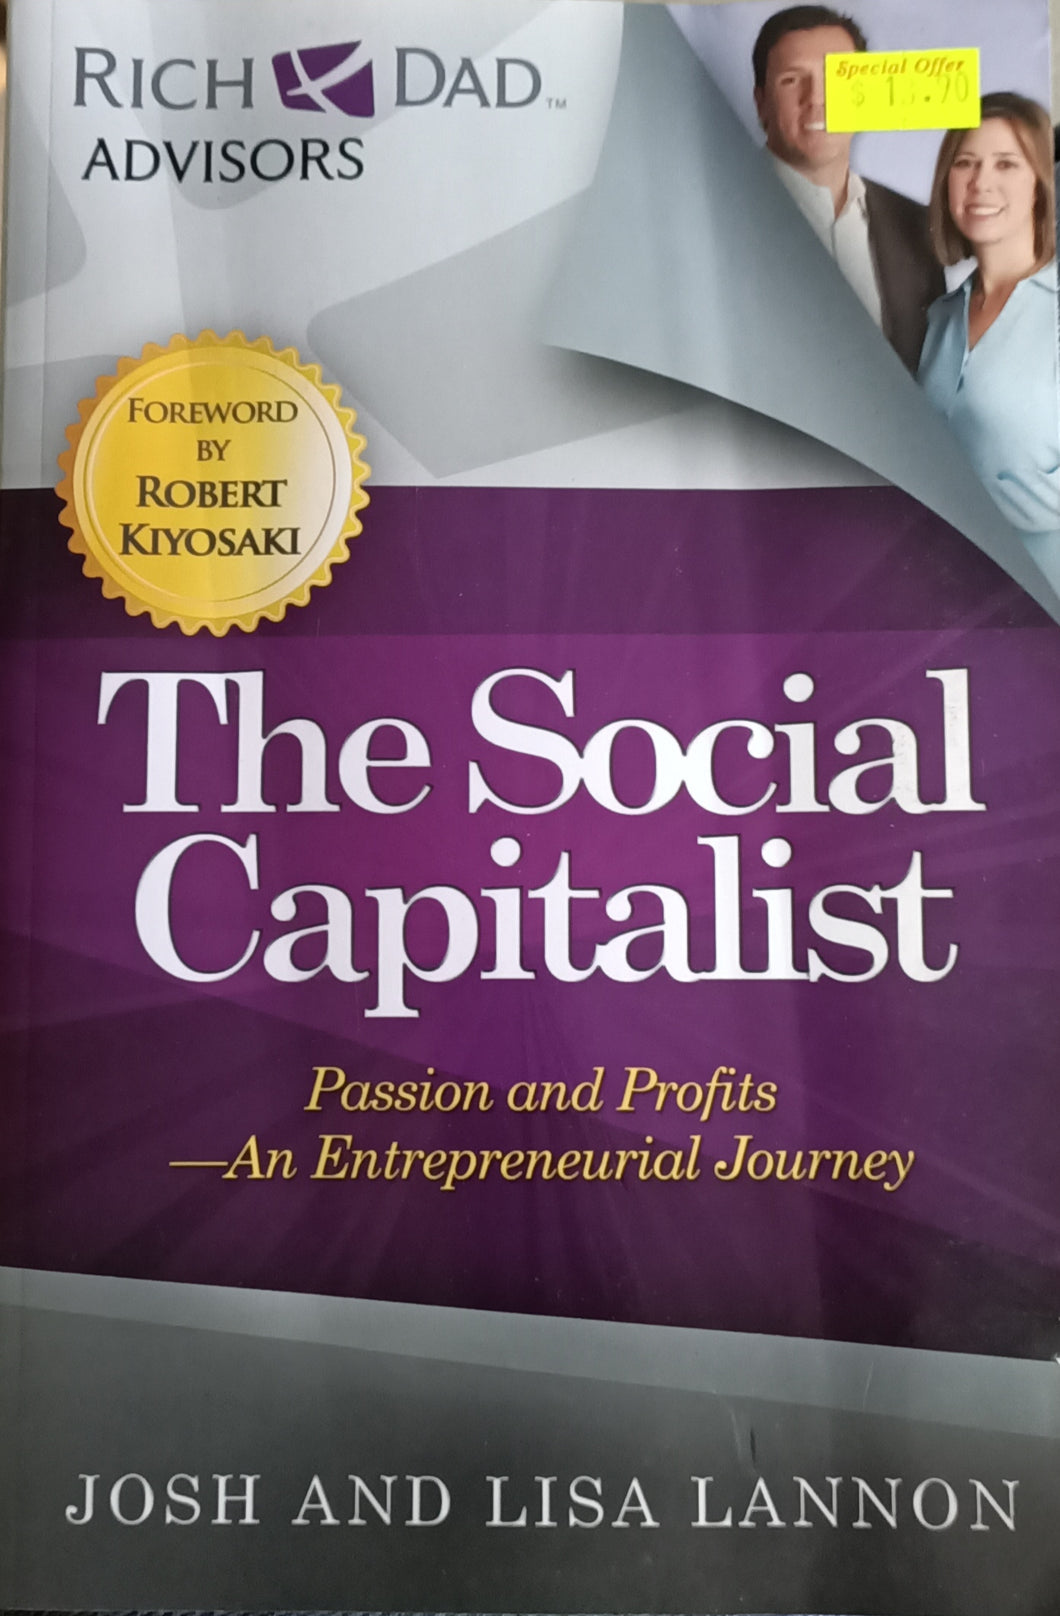 Rich Dad Advisors: The Social Capitalist - Josh and Lisa Lannon